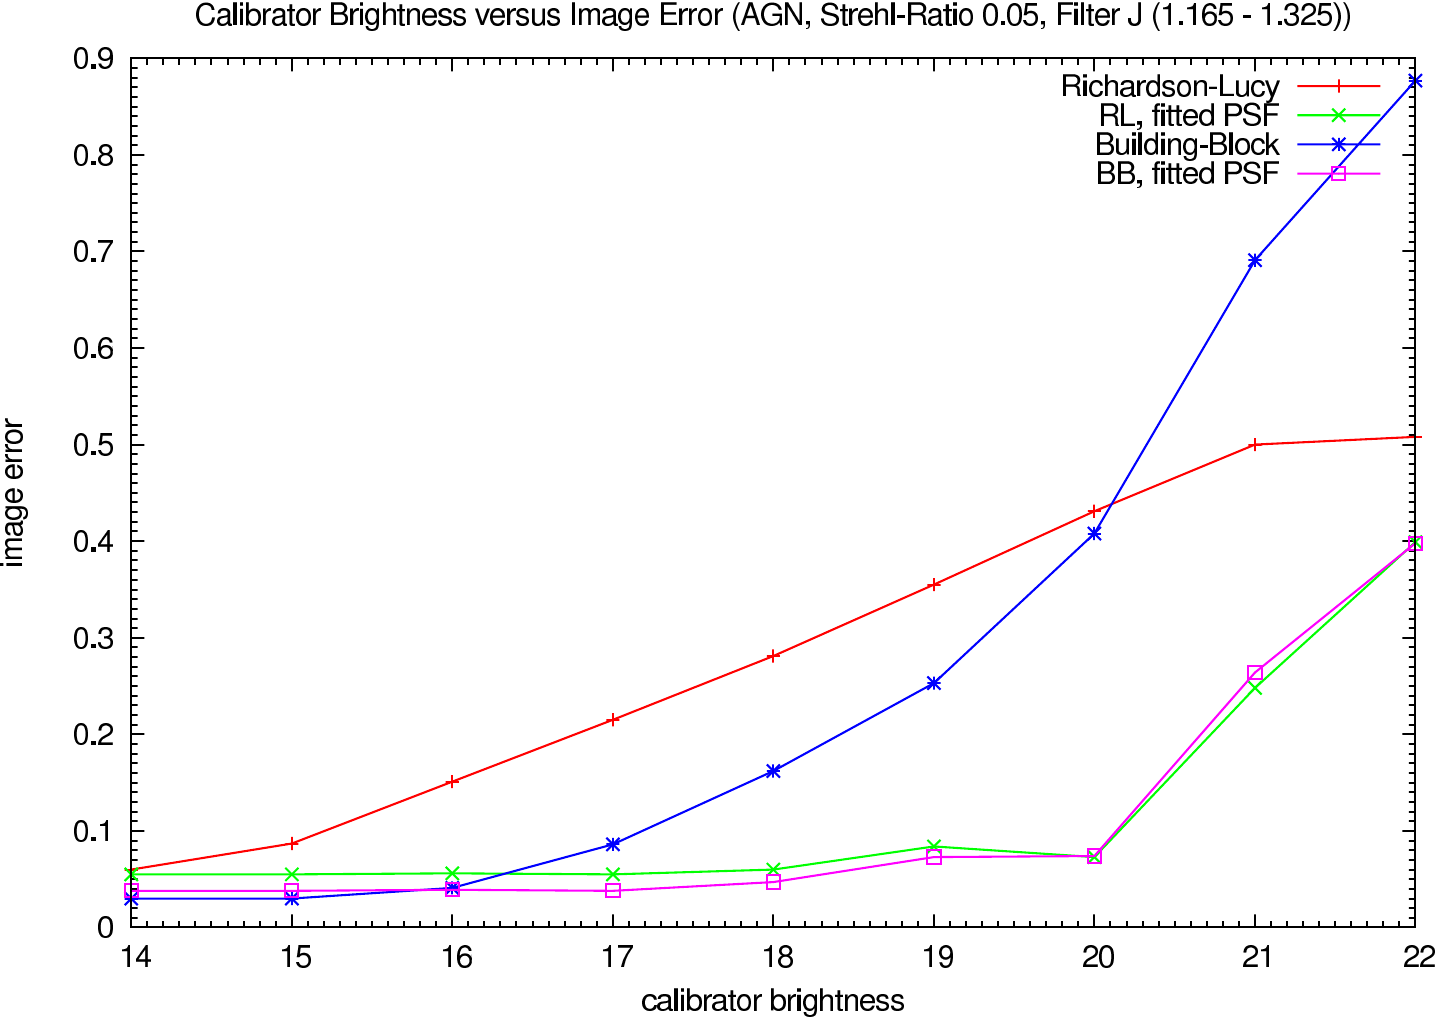 Image errors depending on the calibrator brightness, strehl ratio 0.05, J-Band